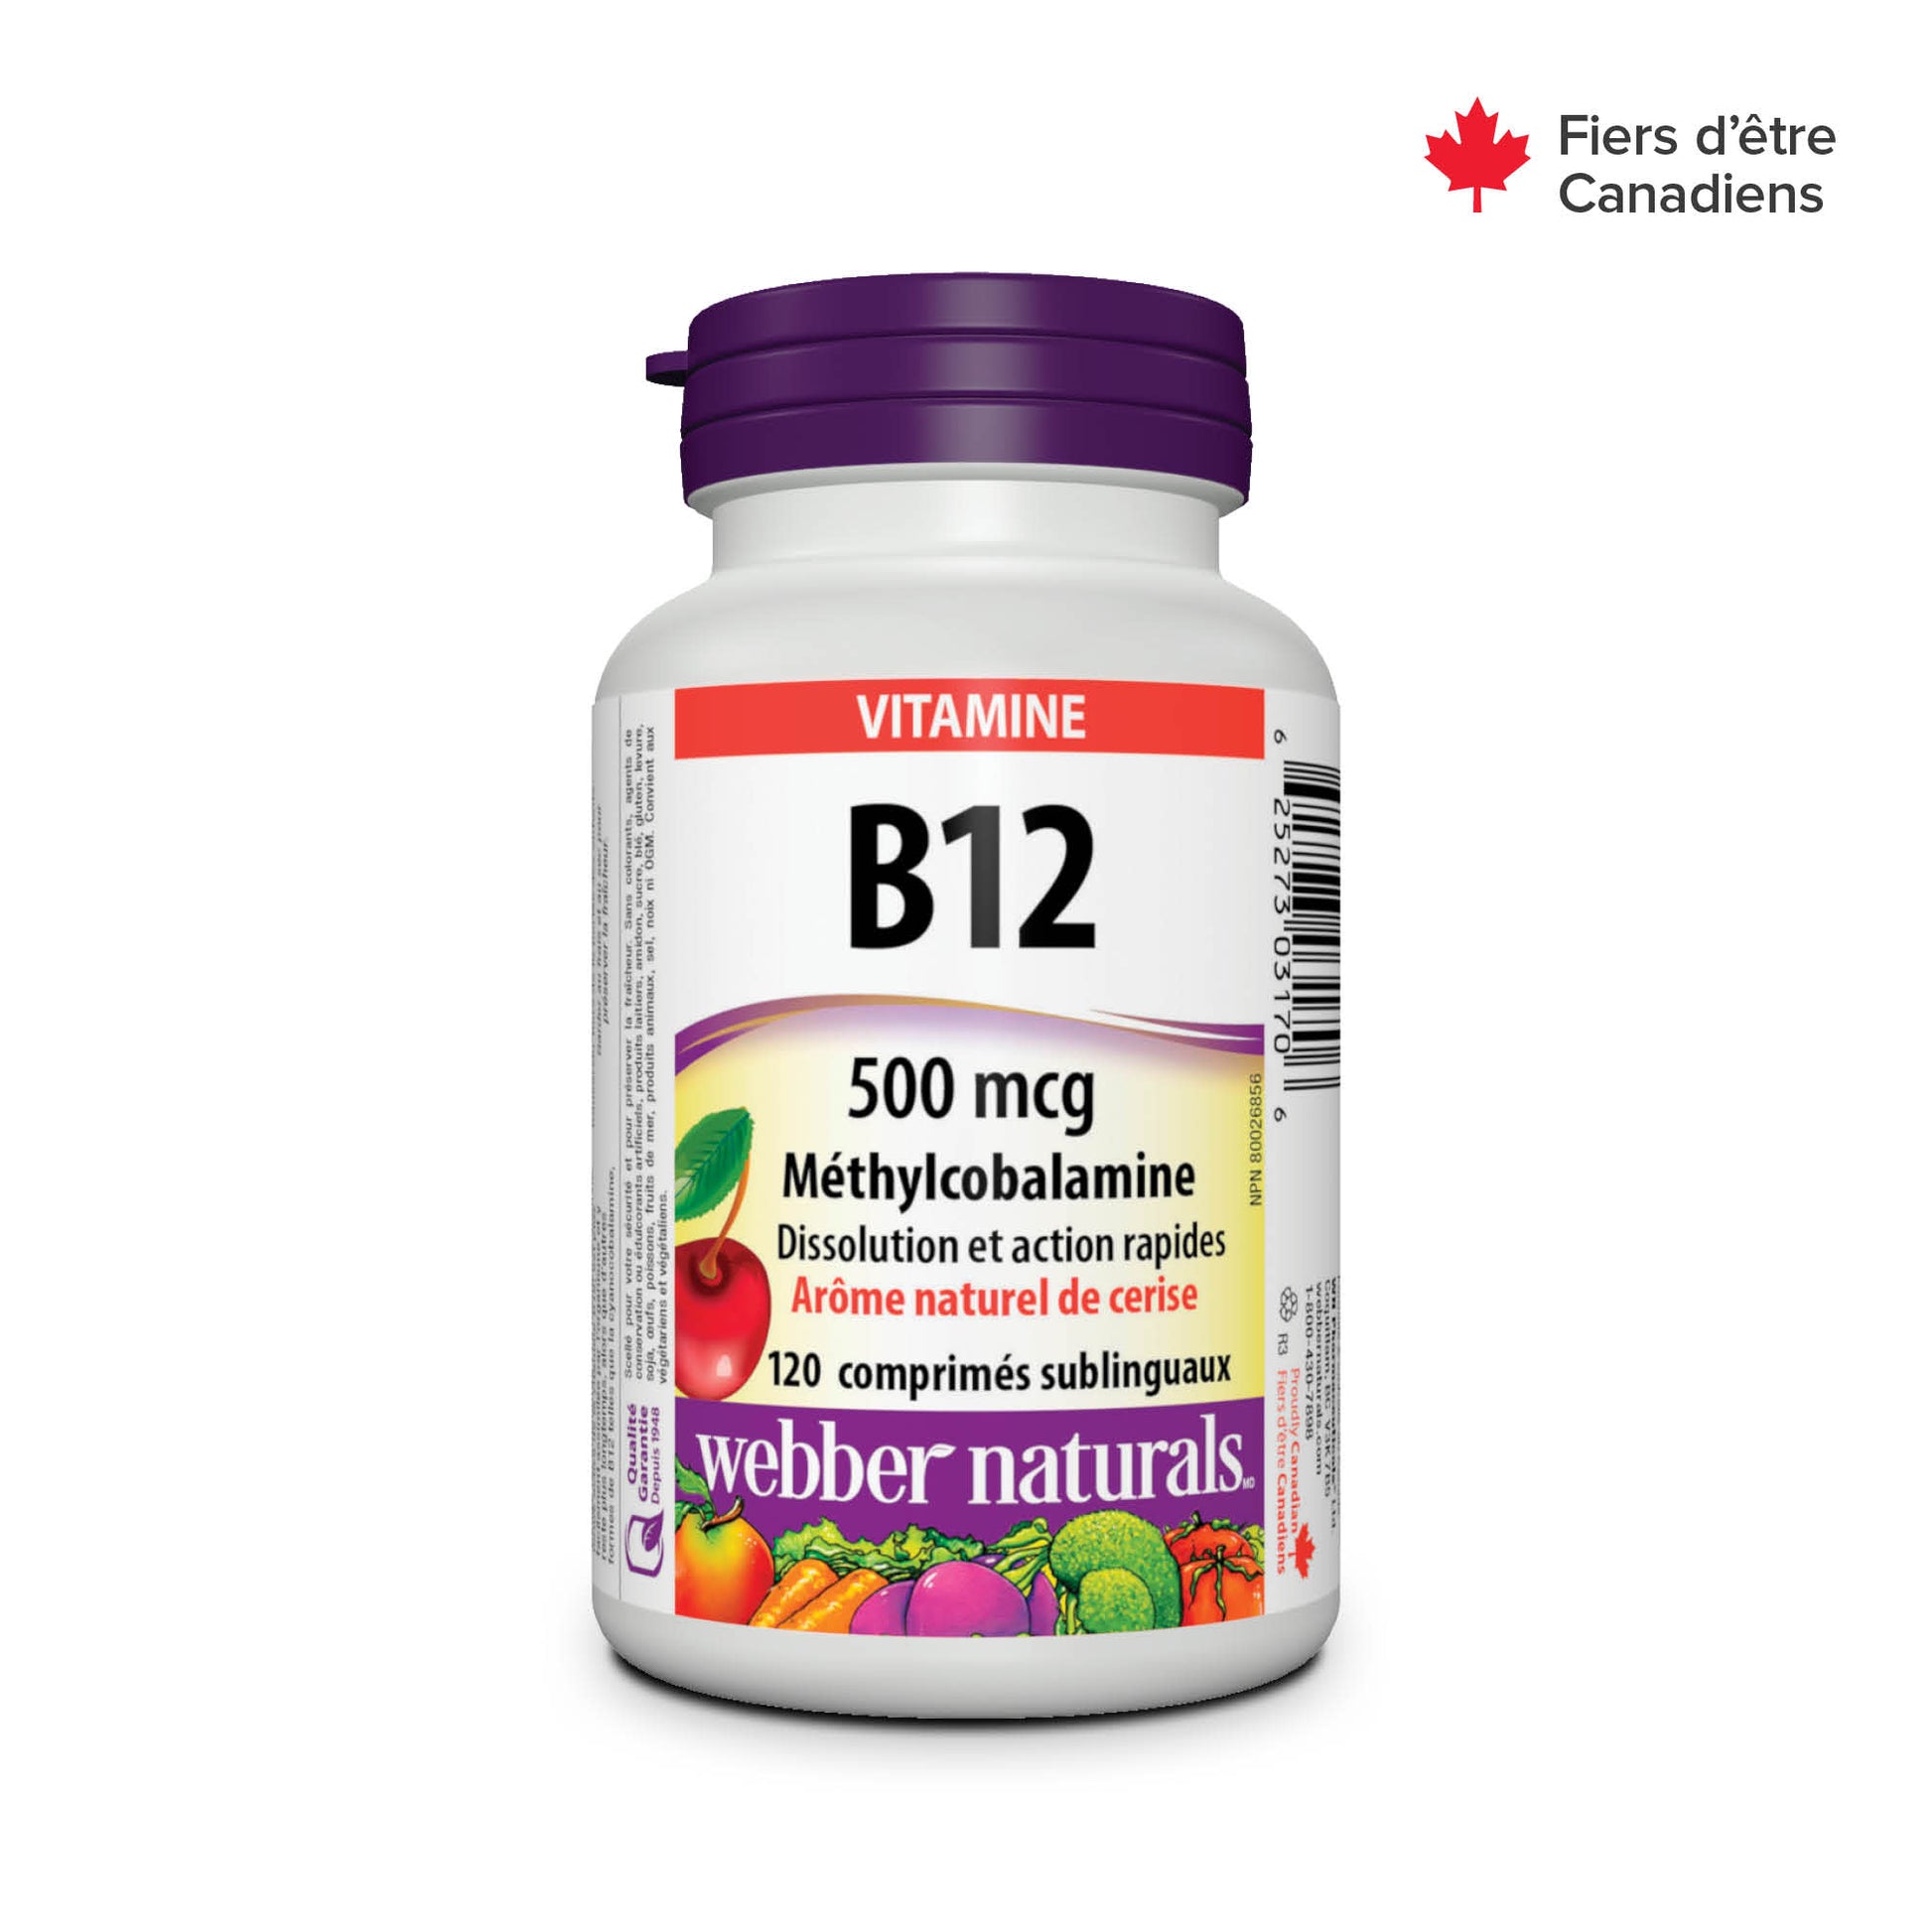 Vitamin B12 500 mcg Natural Cherry Flavour for Webber Naturals|v|hi-res|WN3170